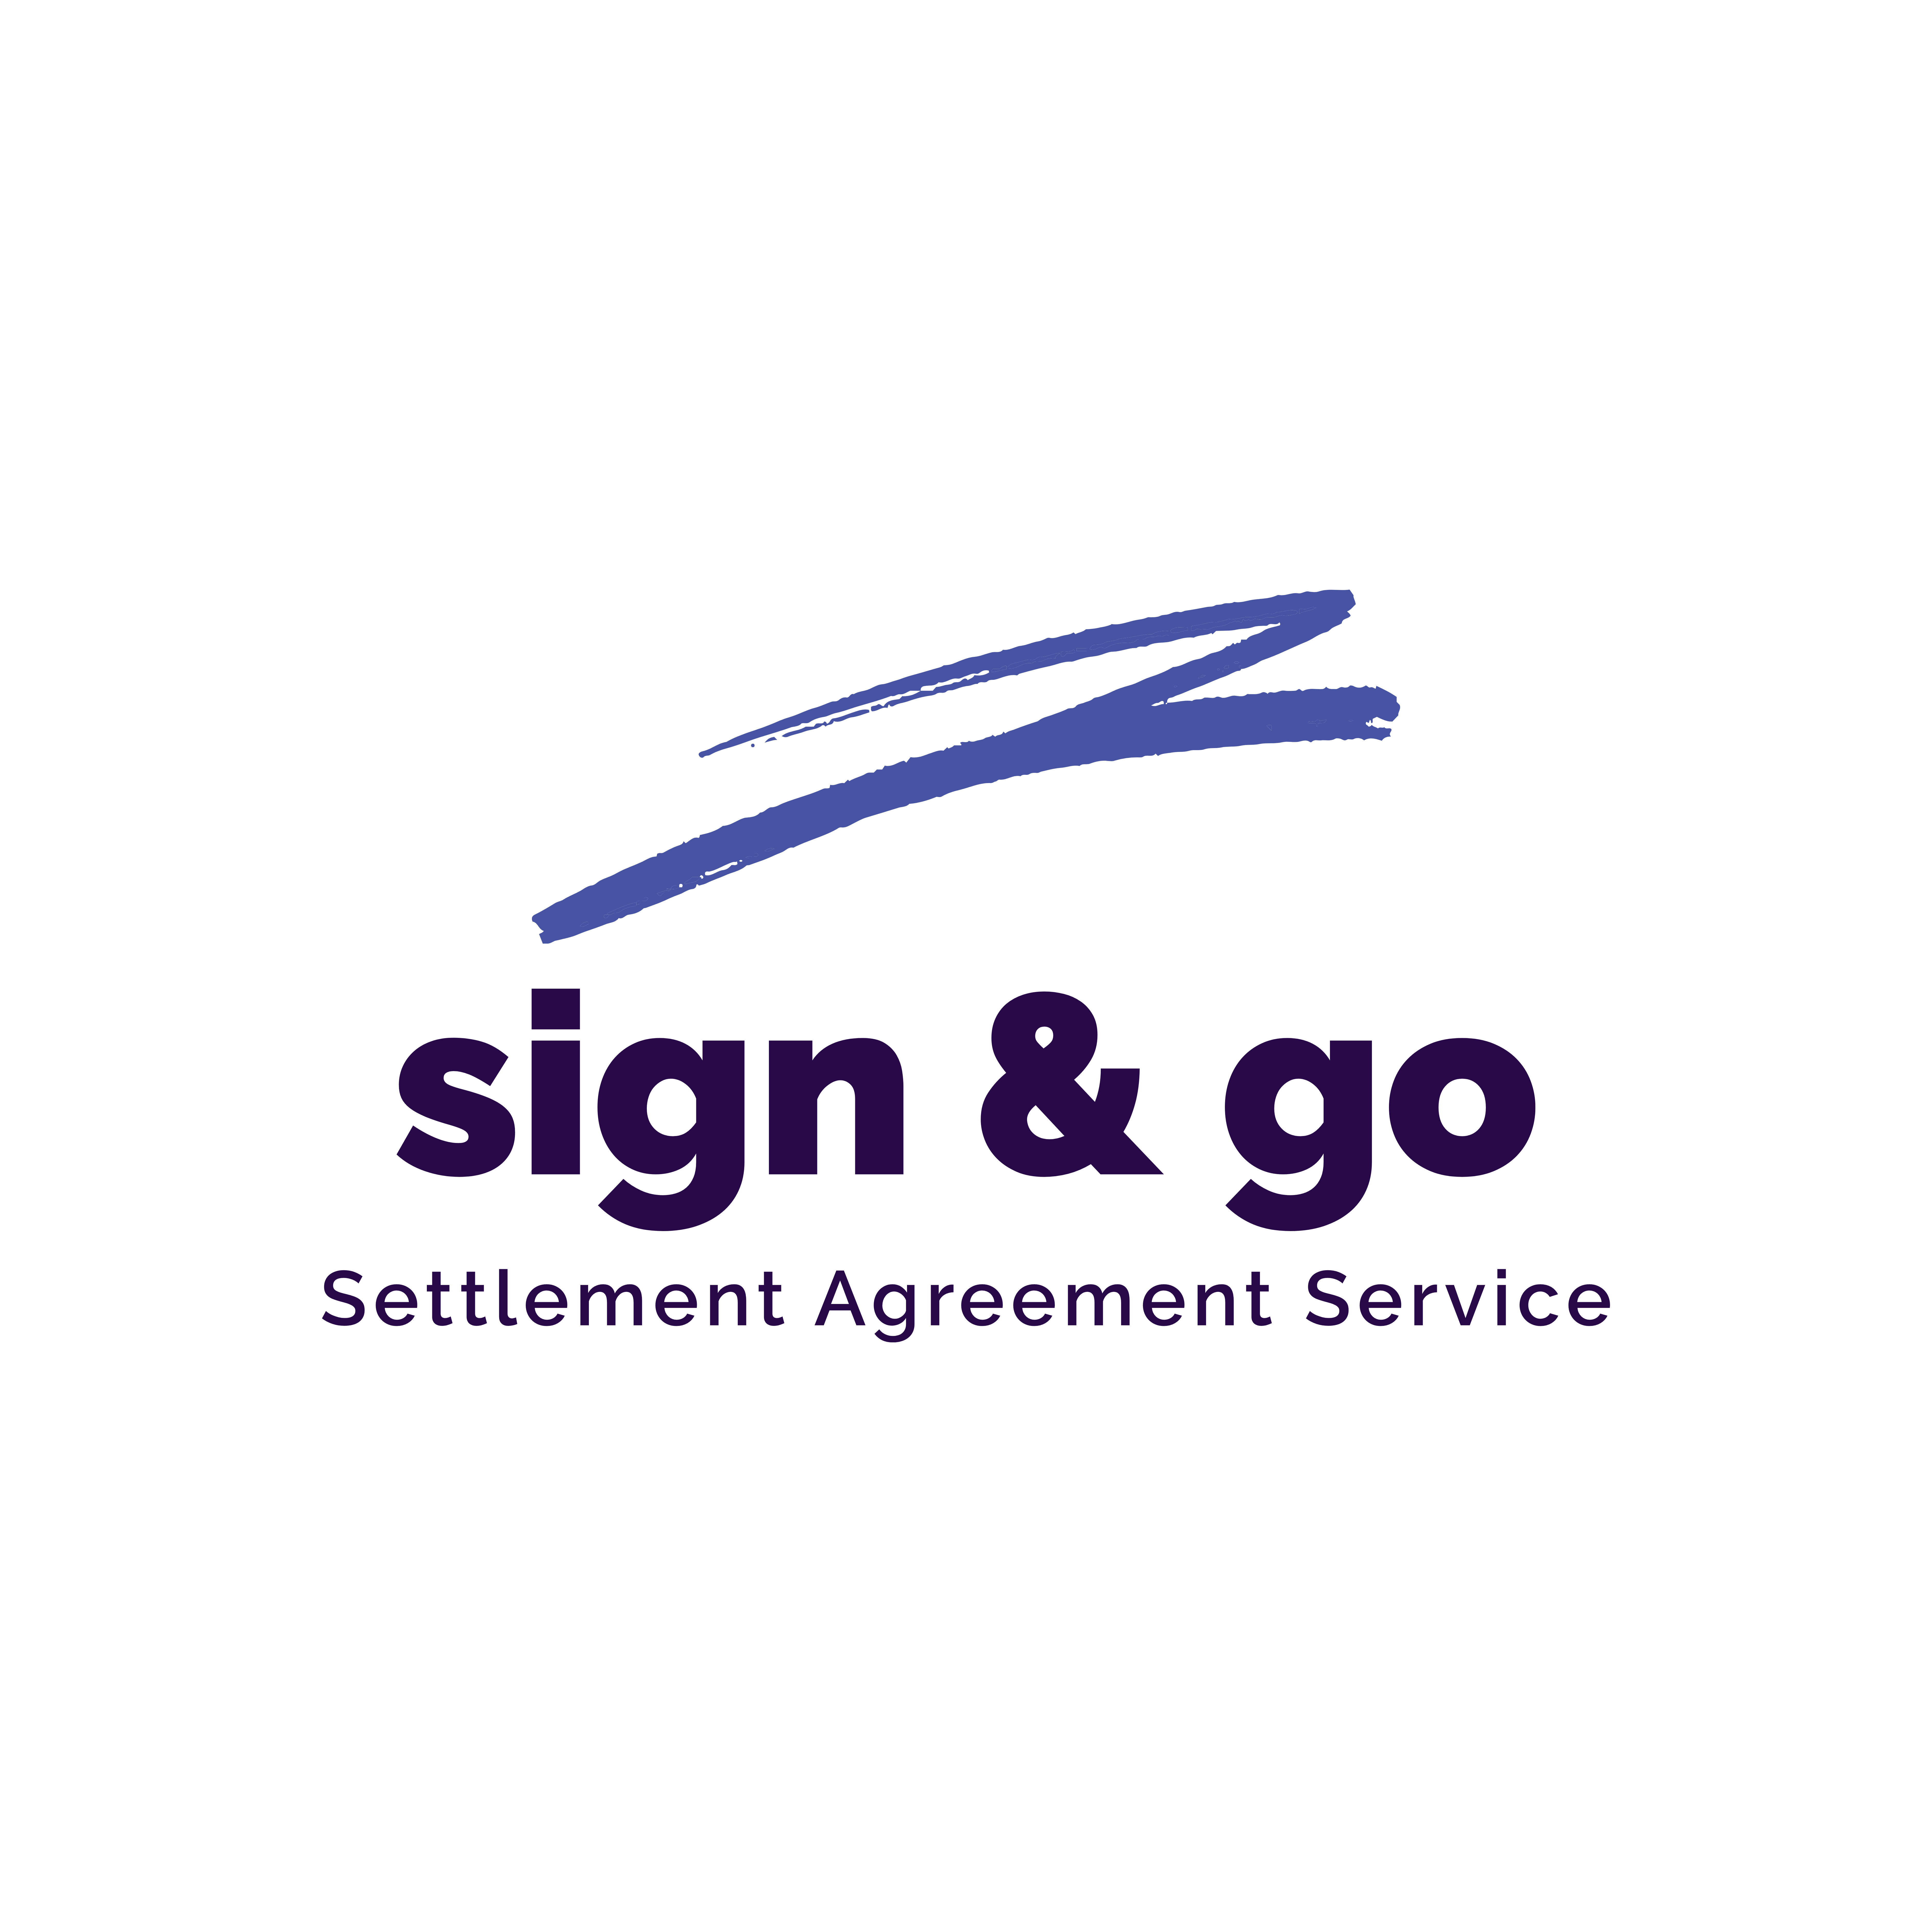 Sign & Go Settlement Agreement Service